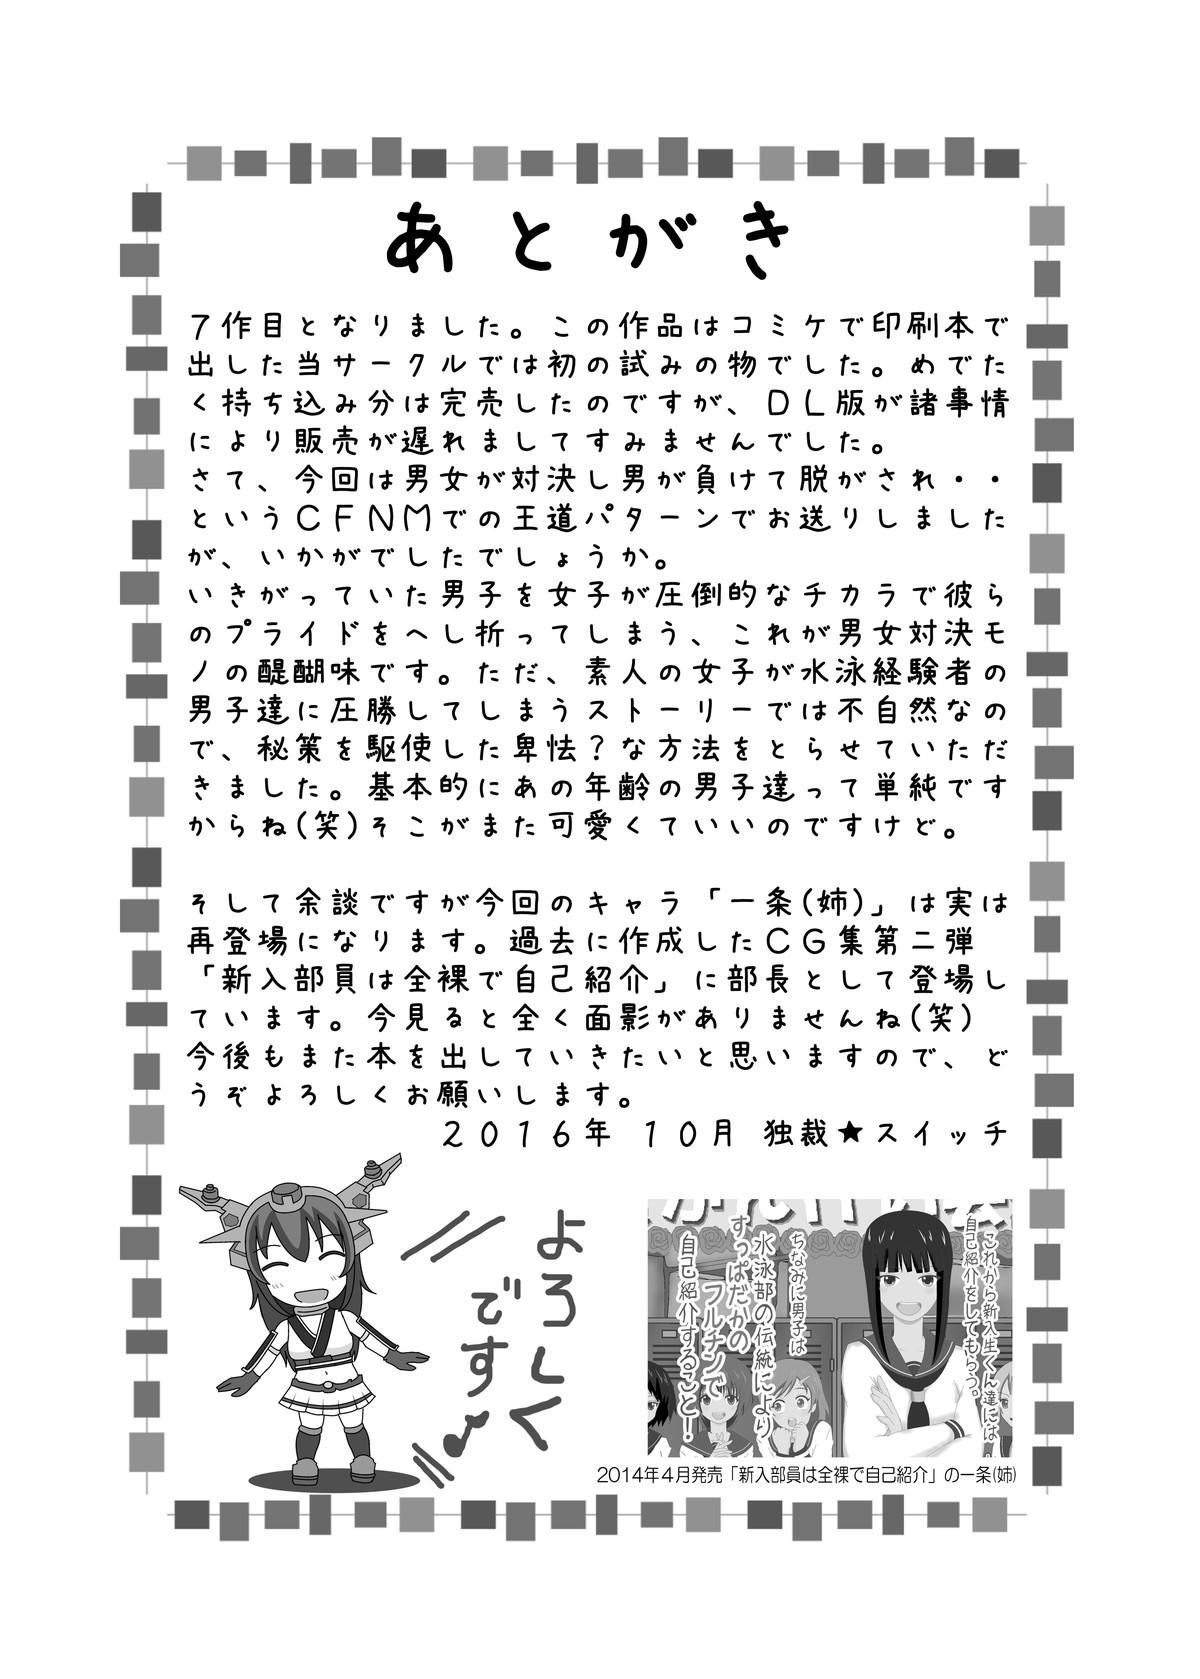 Dom Shoubu ni Maketara Kaipan Bosshuu! Exposed - Page 29